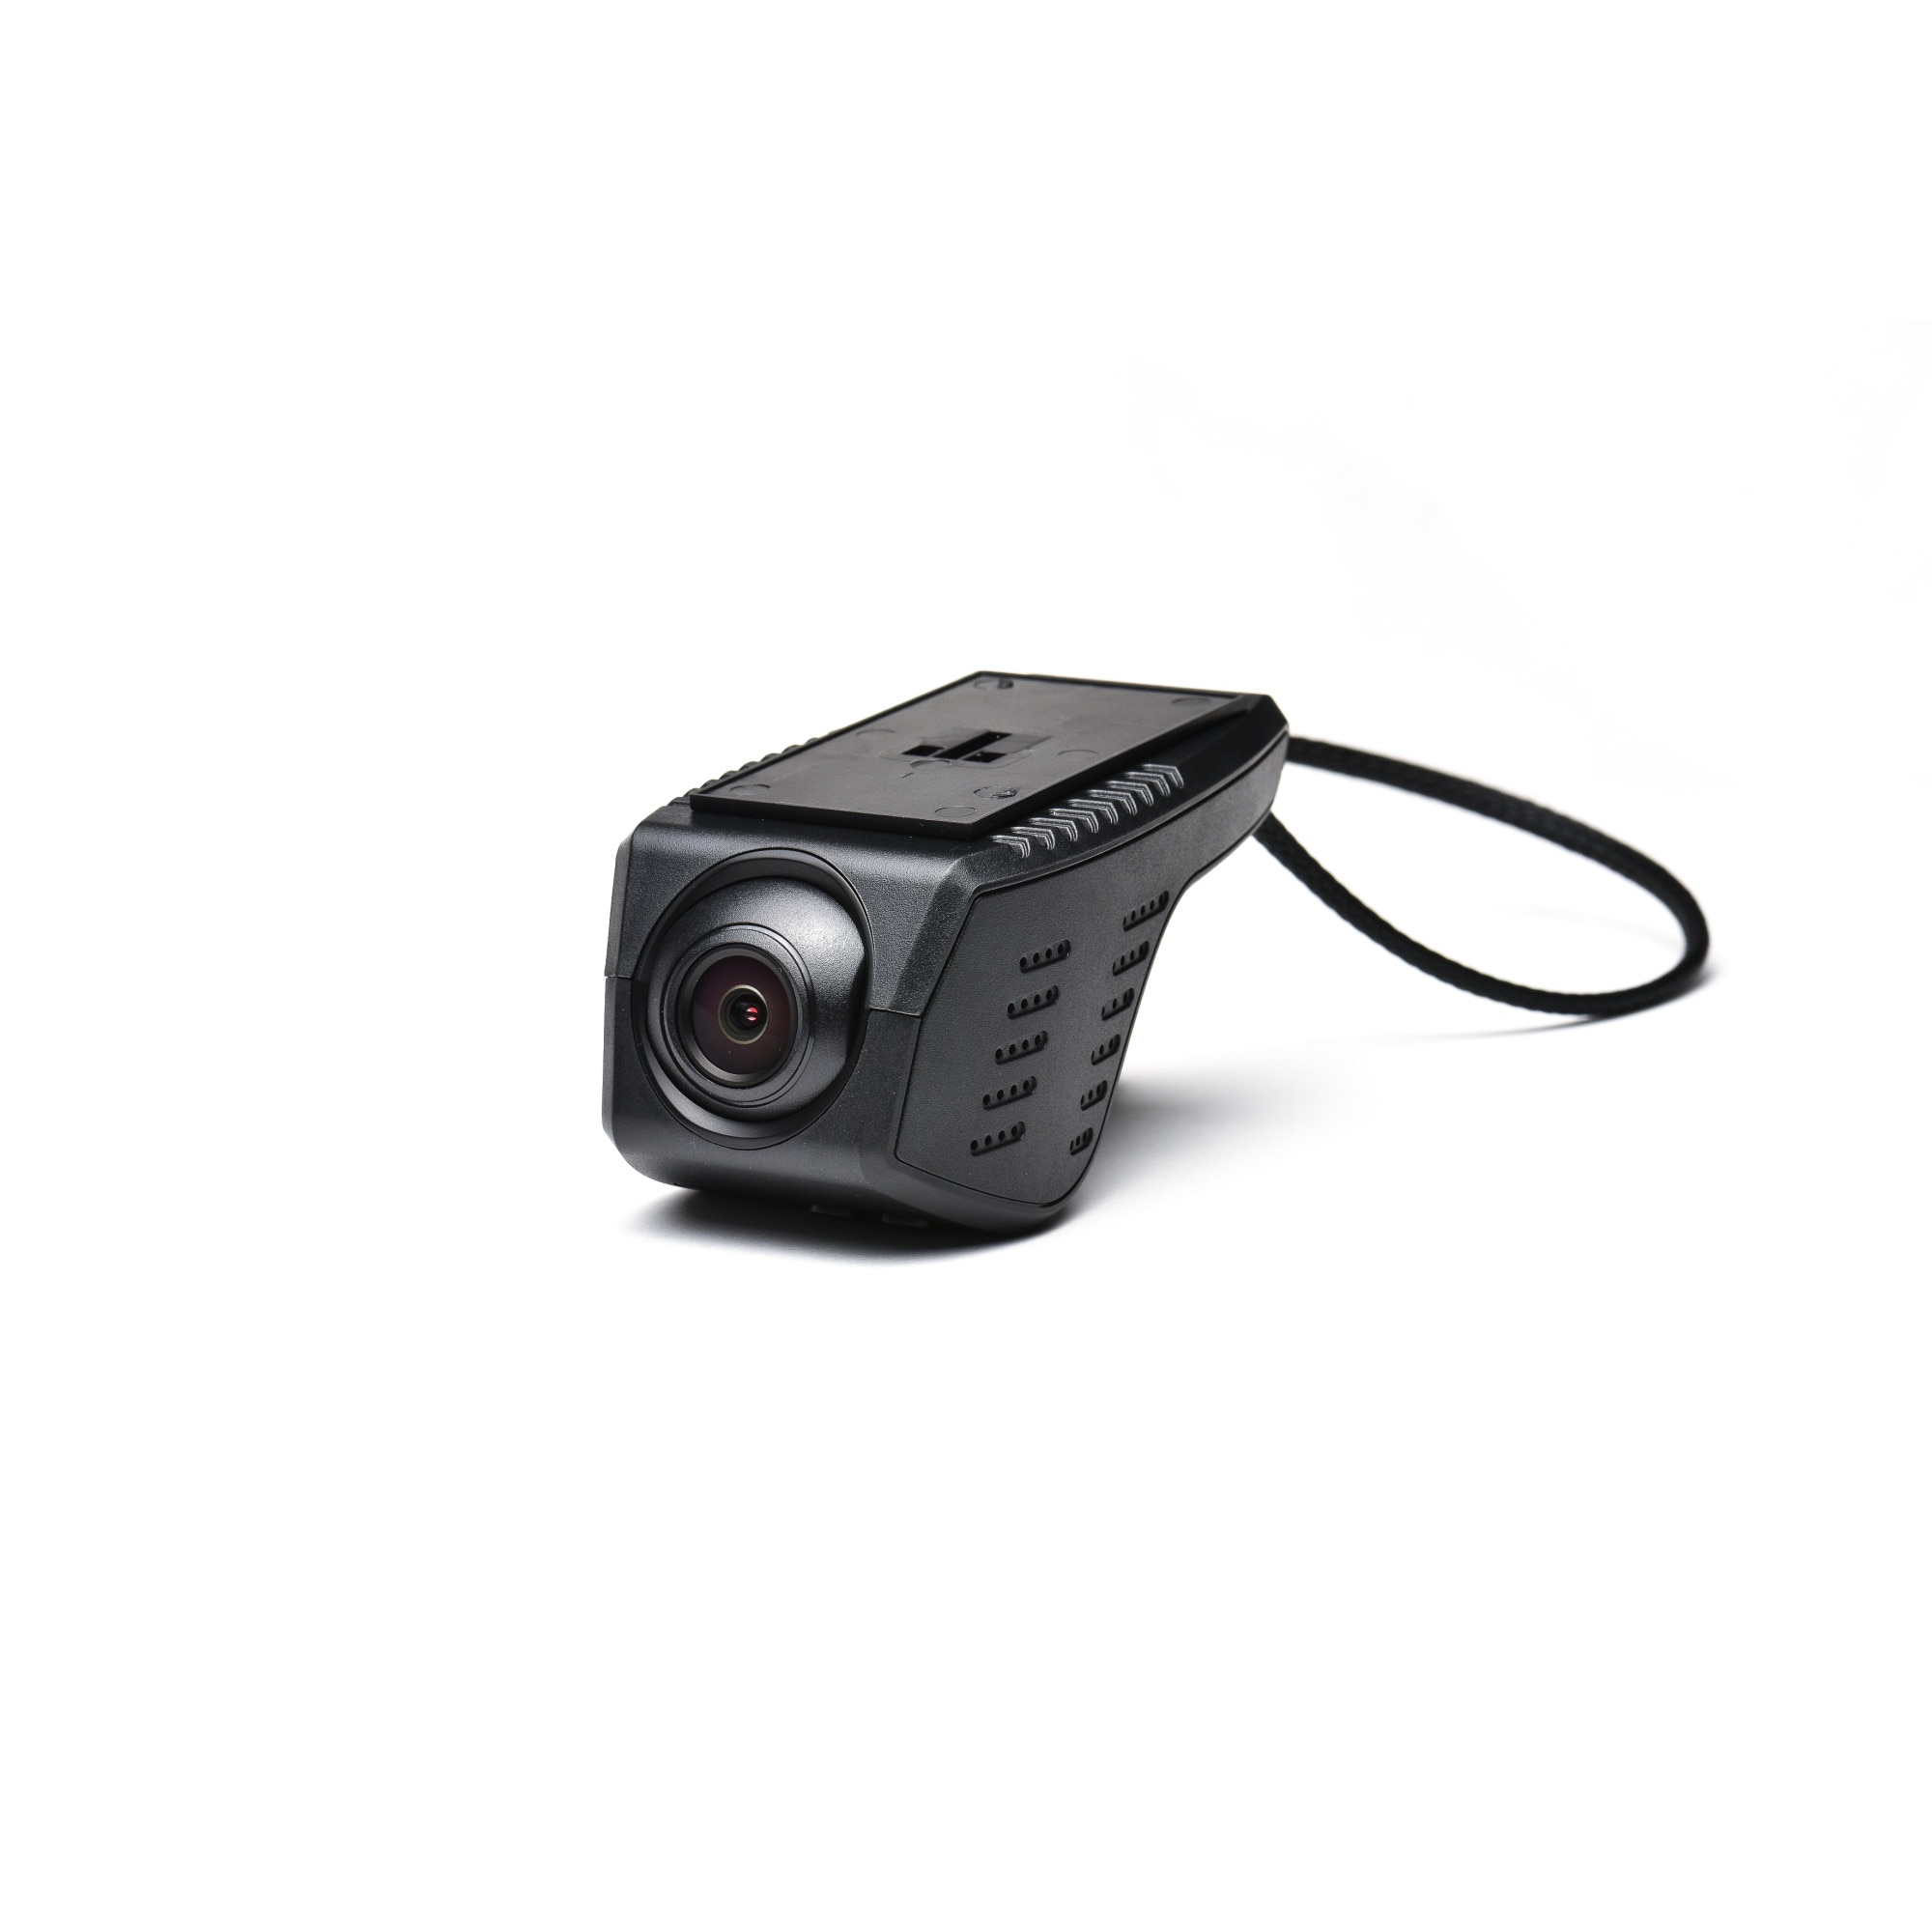 Camera video DVR - BlueLens Two GPS - FullHD, Coordonate GPS si Viteza in timp real, conexiune Wi-Fi - eMAG.ro